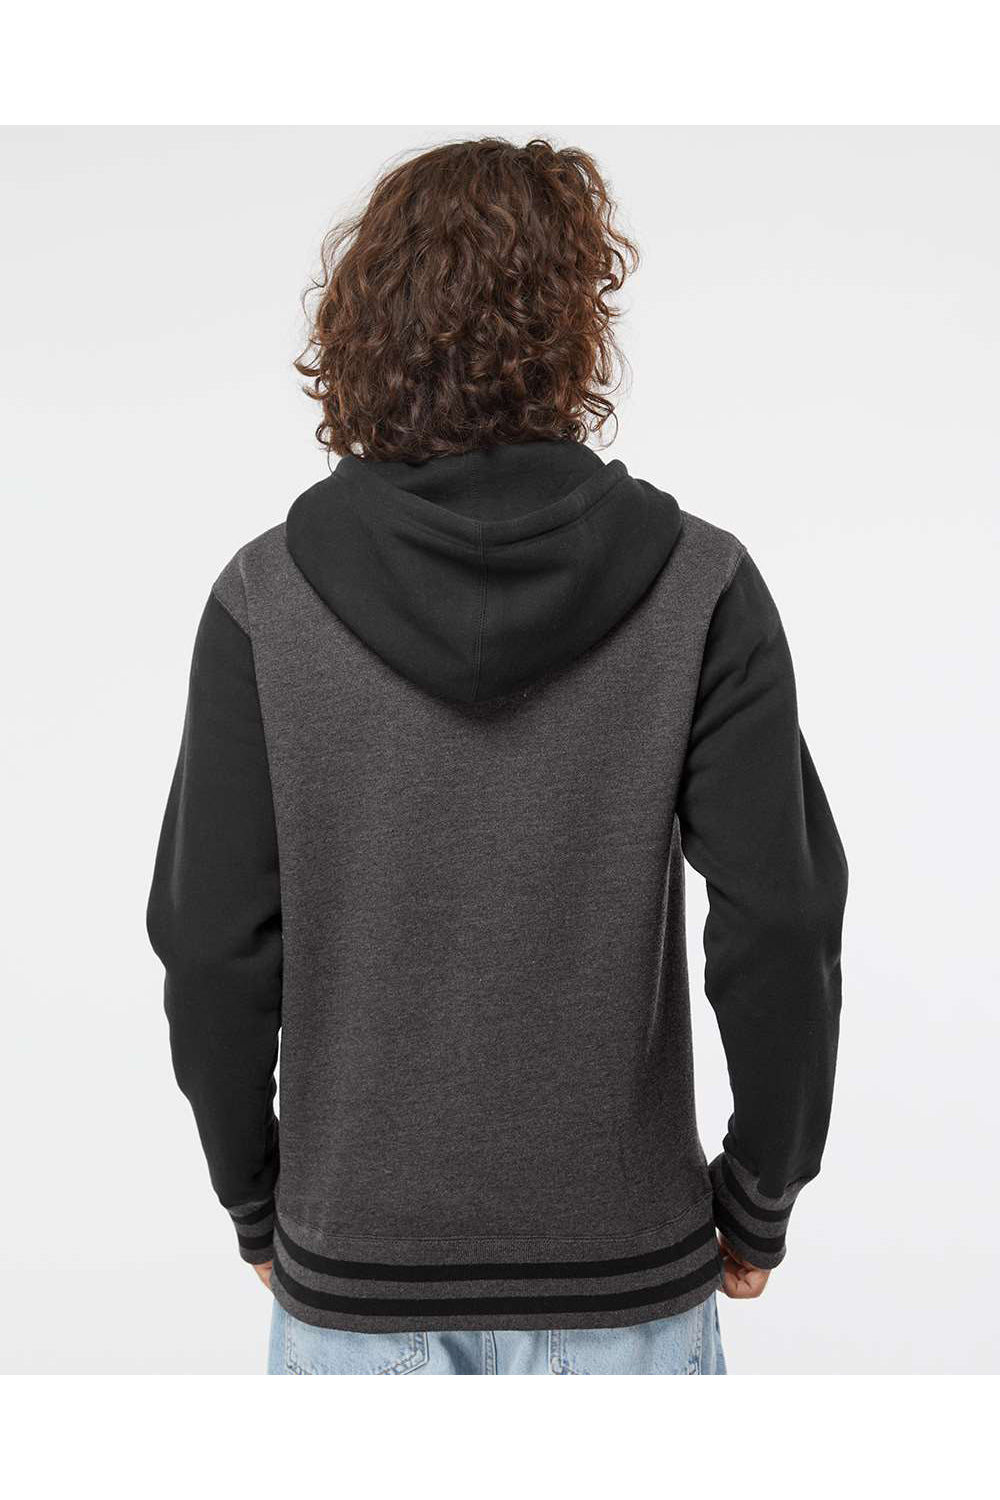 Independent Trading Co. IND45UVZ Mens Varsity Full Zip Hooded Sweatshirt Hoodie Heather Charcoal Grey/Black Model Back